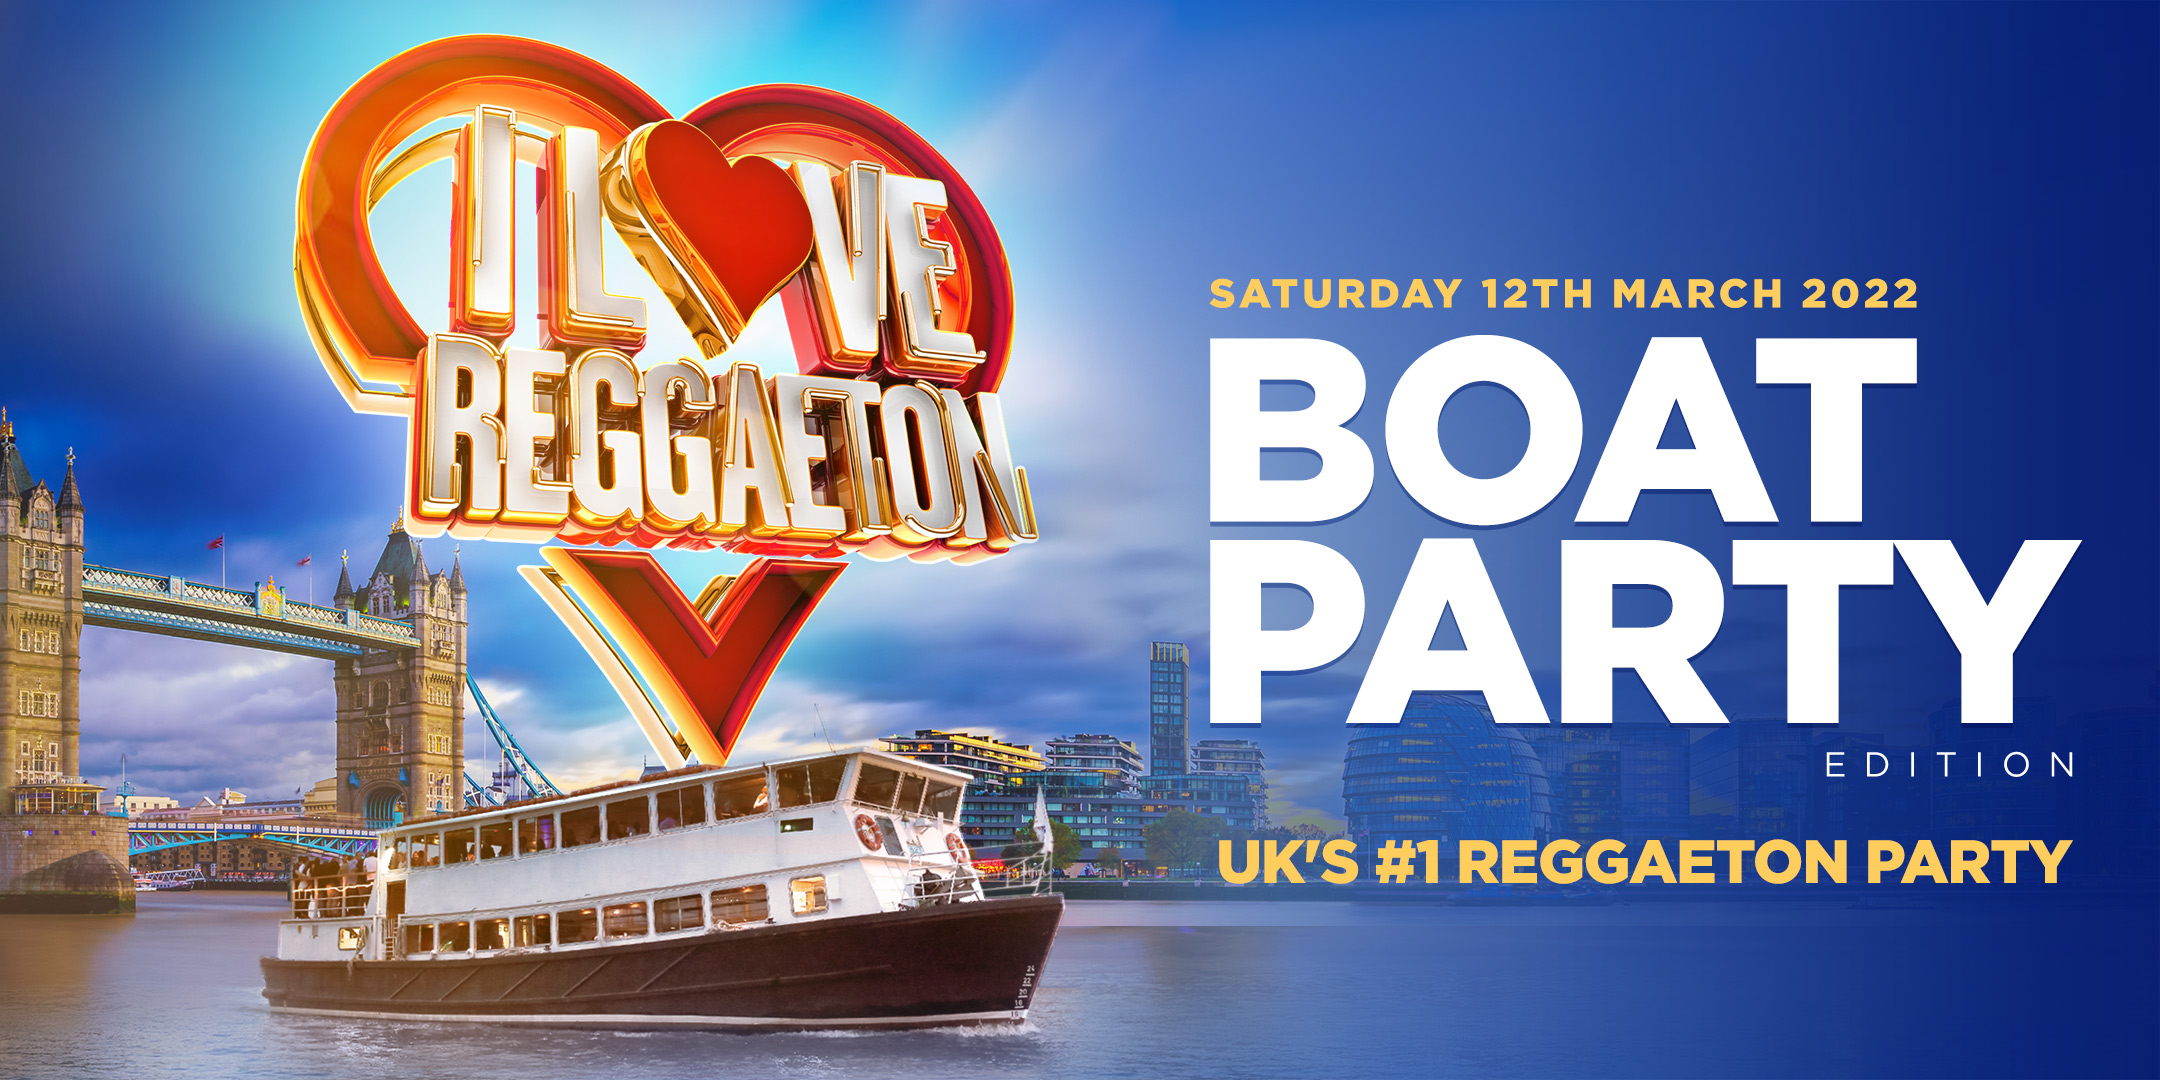 reggae boat cruise london